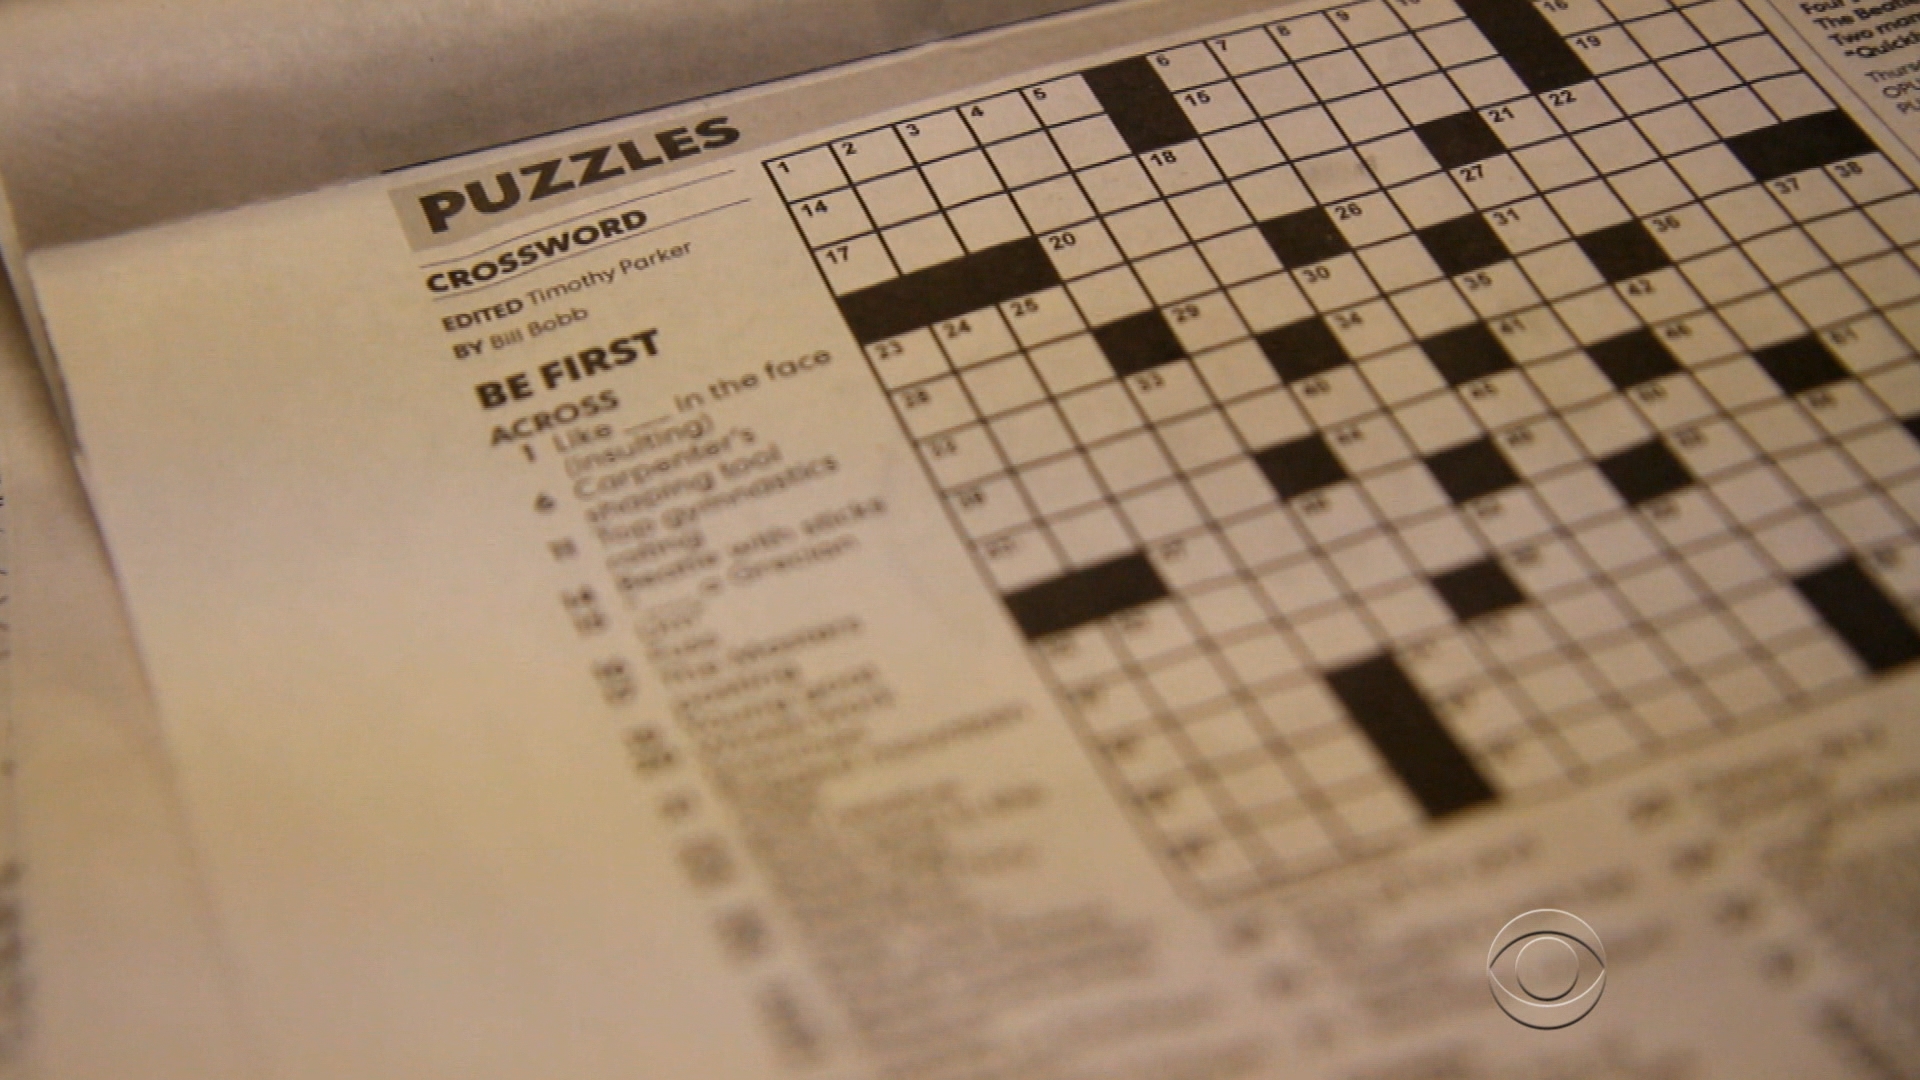 Crossword puzzle: Do clues reveal plagiarism? CBS News